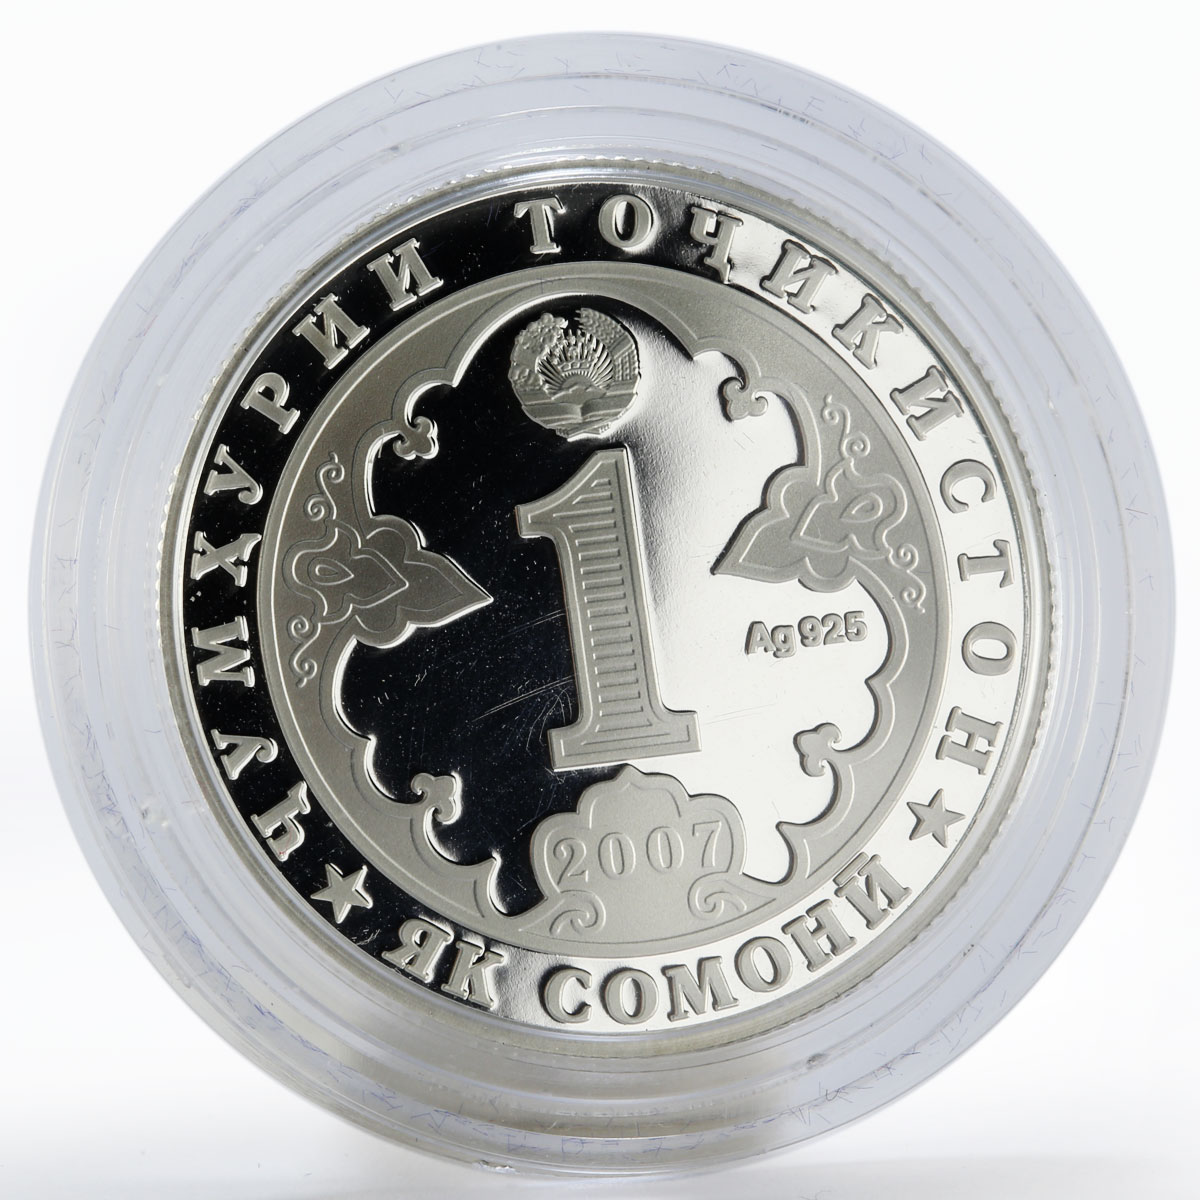 Tajikistan 1 somoni 800th Anniversary of Jaloliddini Rumi proof silver coin 2007